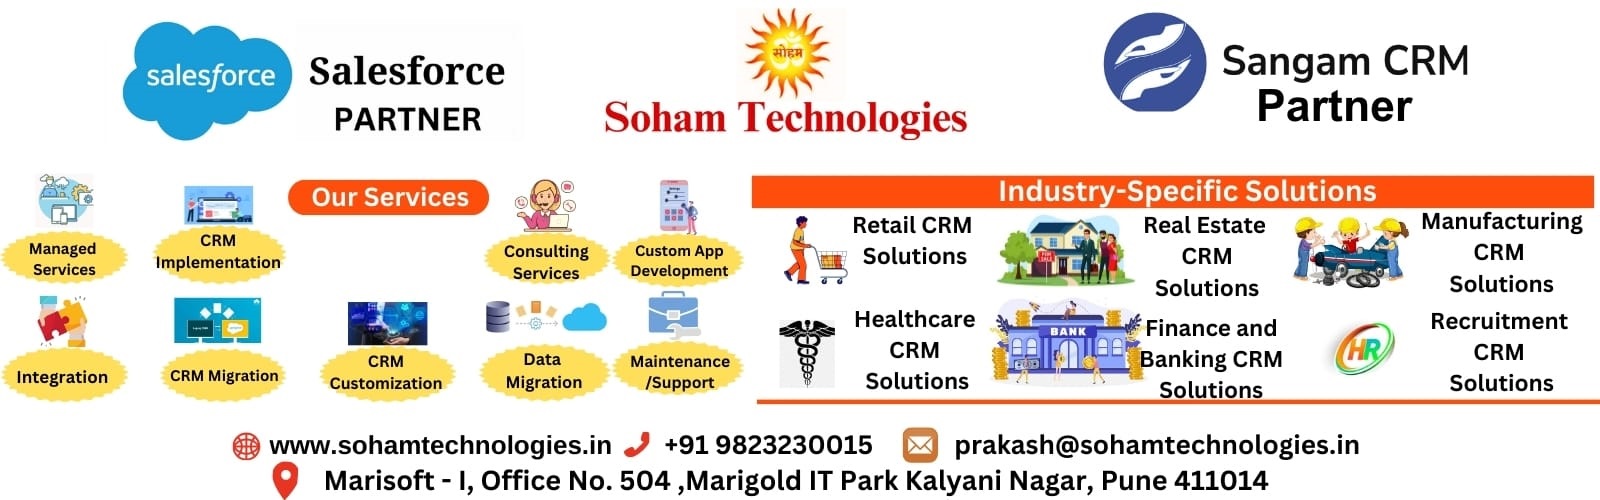 Soham Technologies - Sales Force